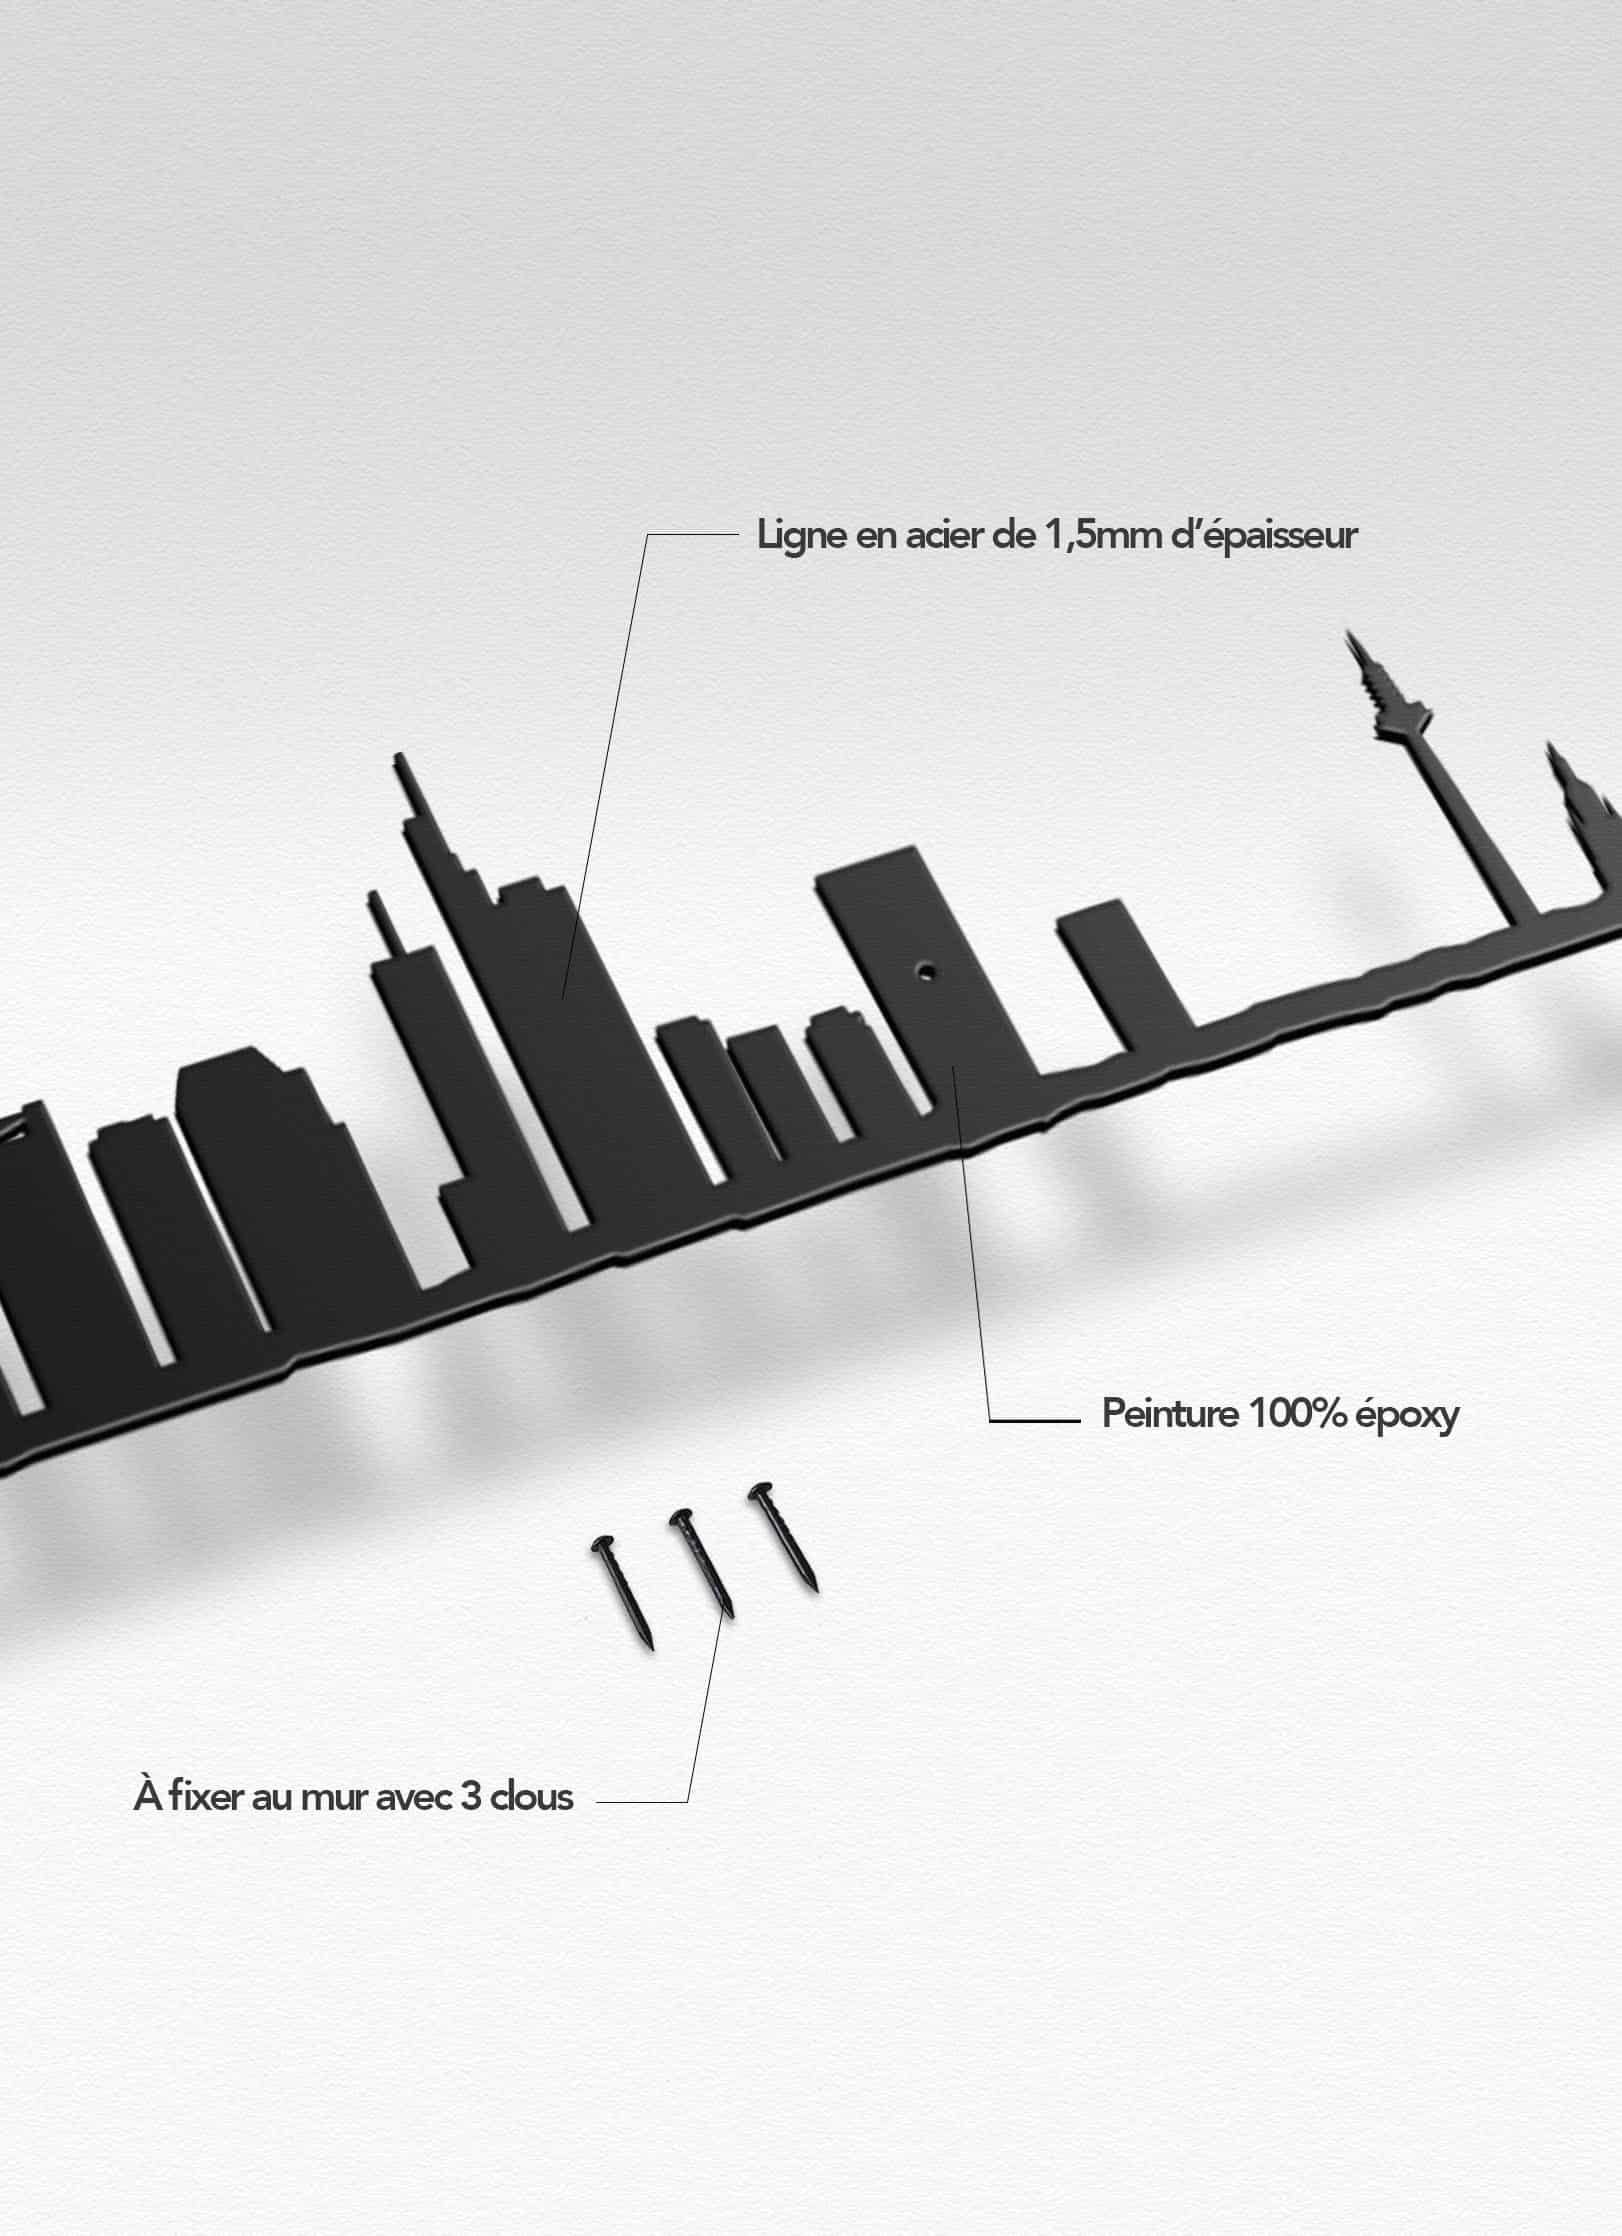 Presentation of the skyline of Frankfurt